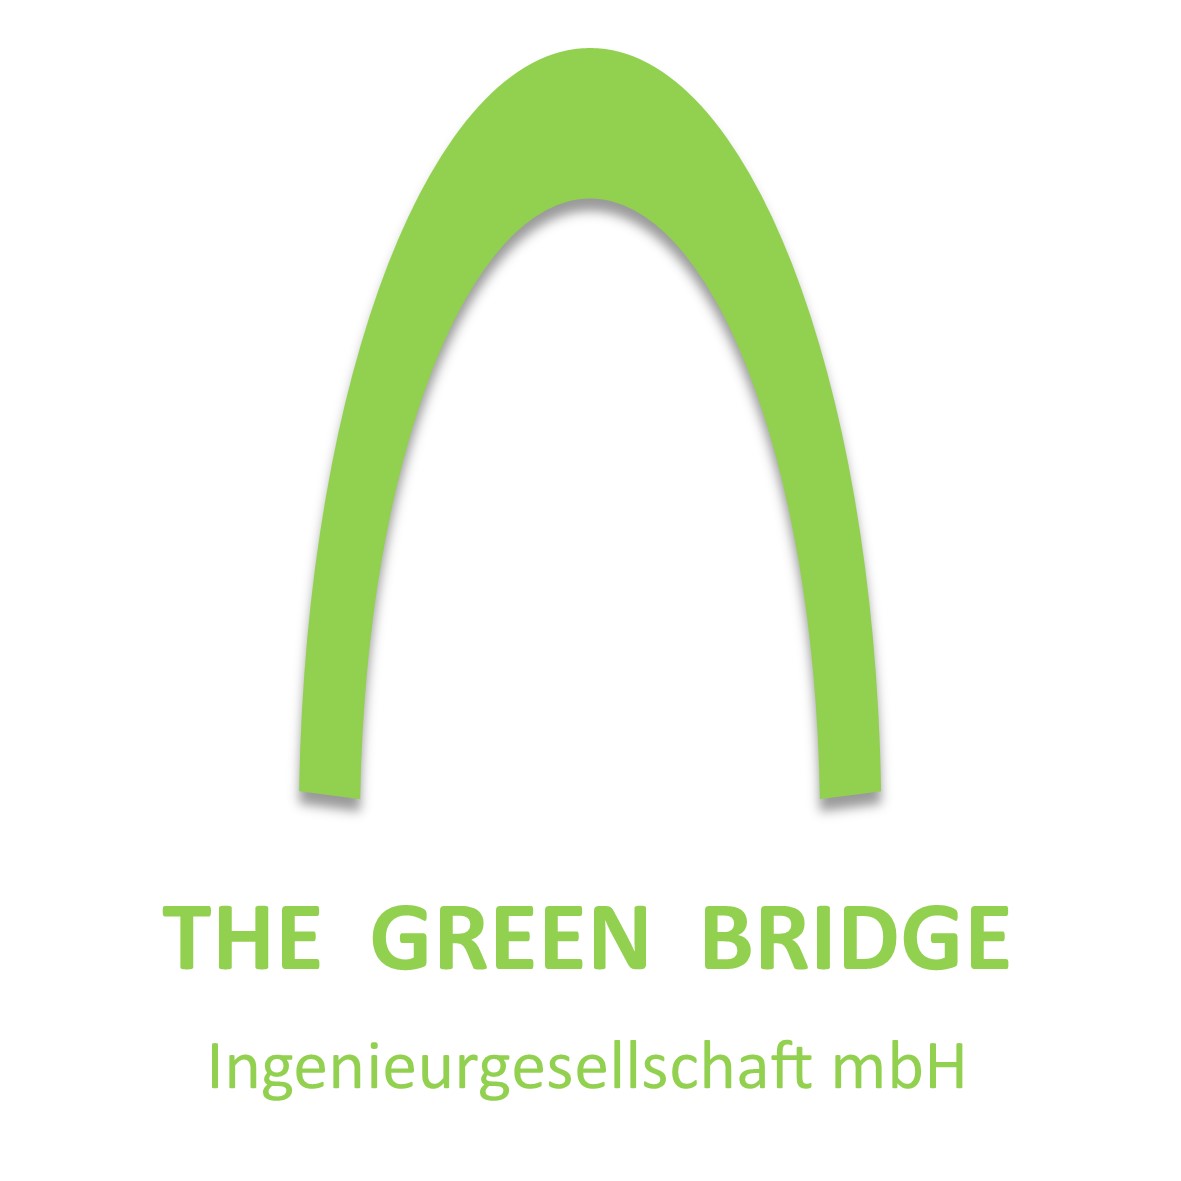 The Green Bridge Ingenieursgesellschaft